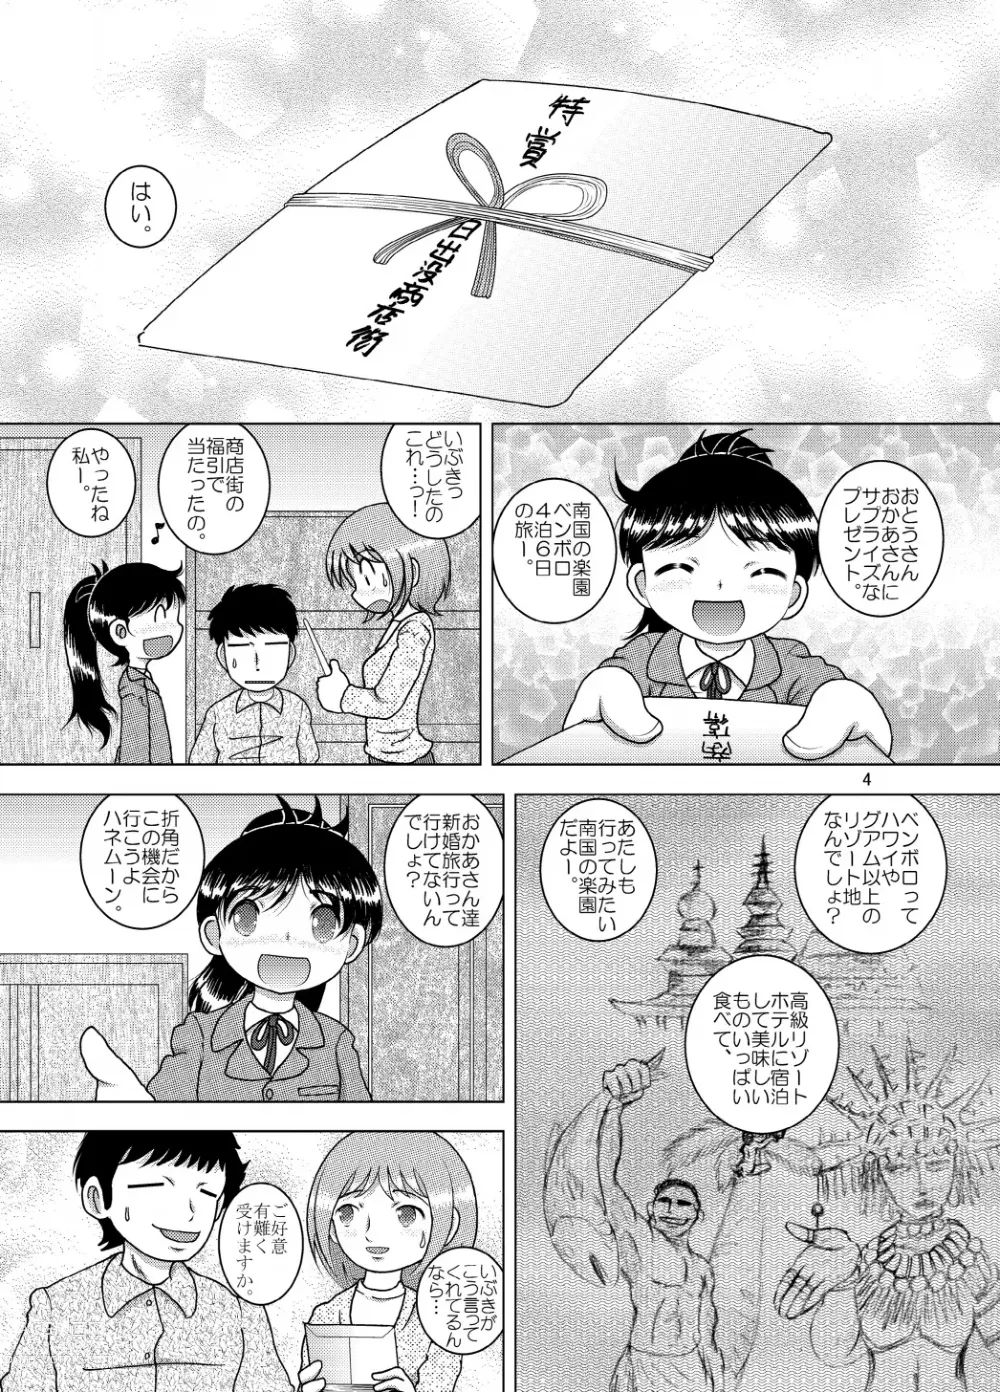 Page 4 of doujinshi Kirio Amakan